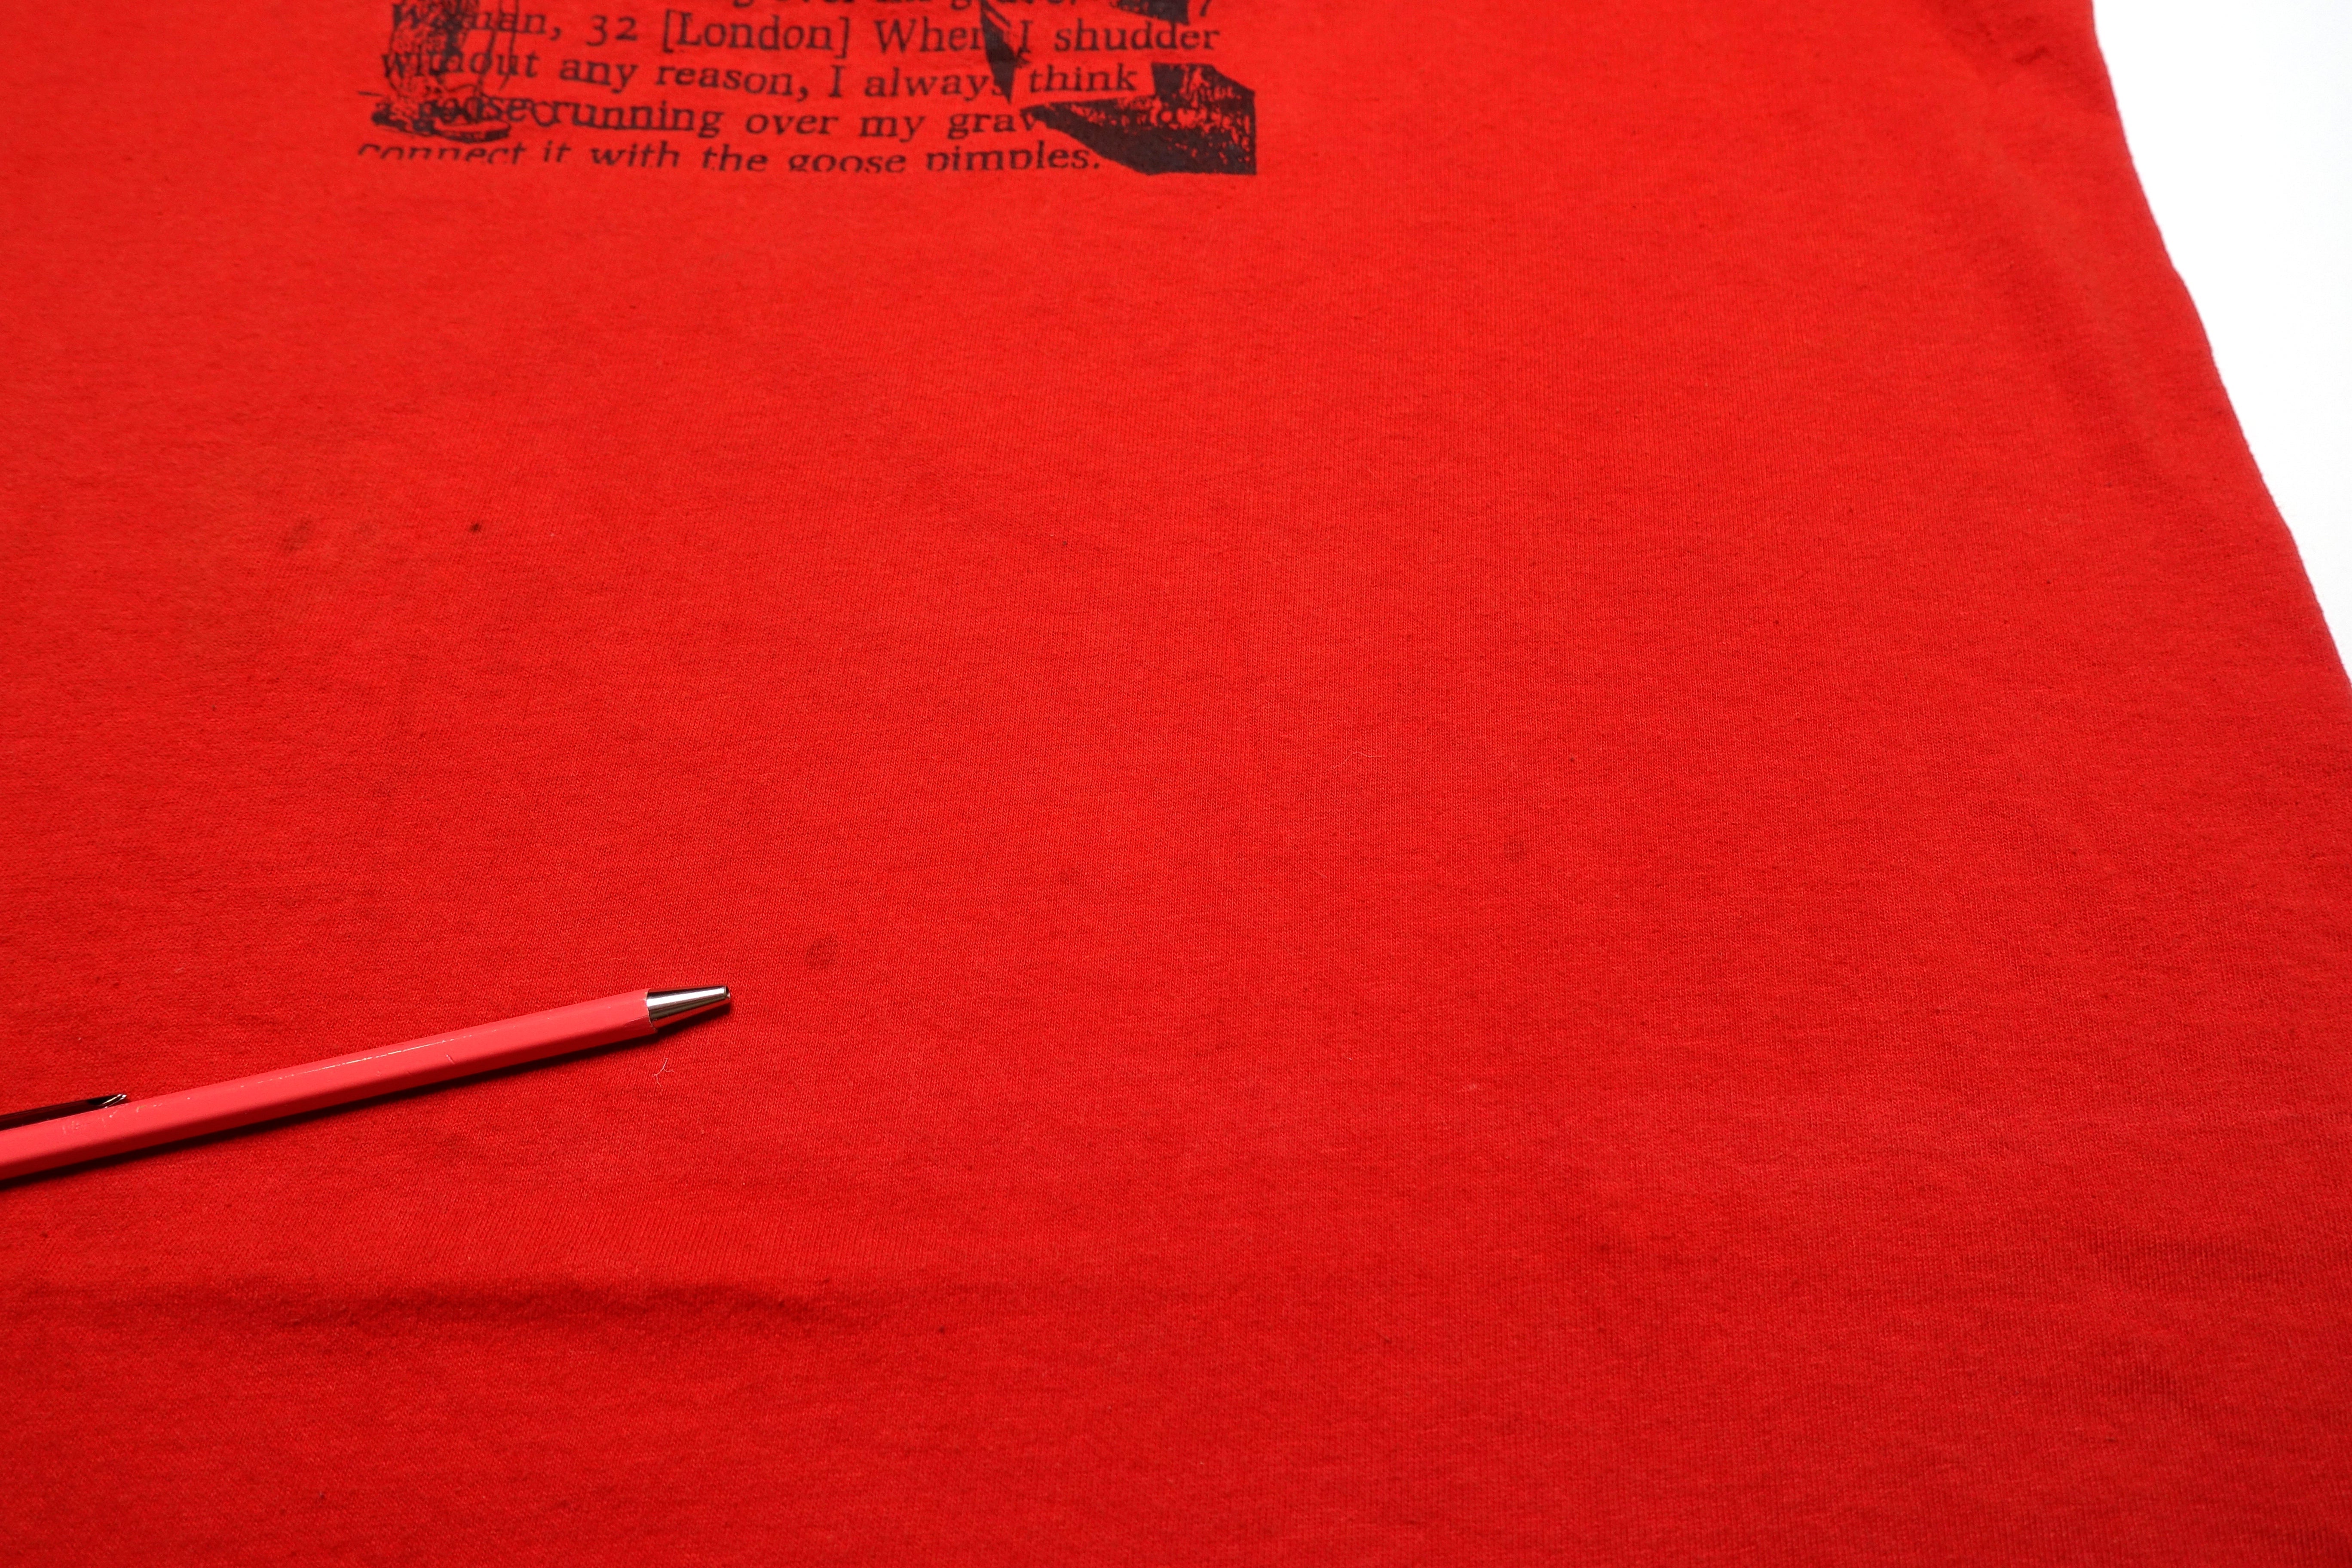 Shudder To Think - Dart Thrower 90's Red Tour Shirt Size XL